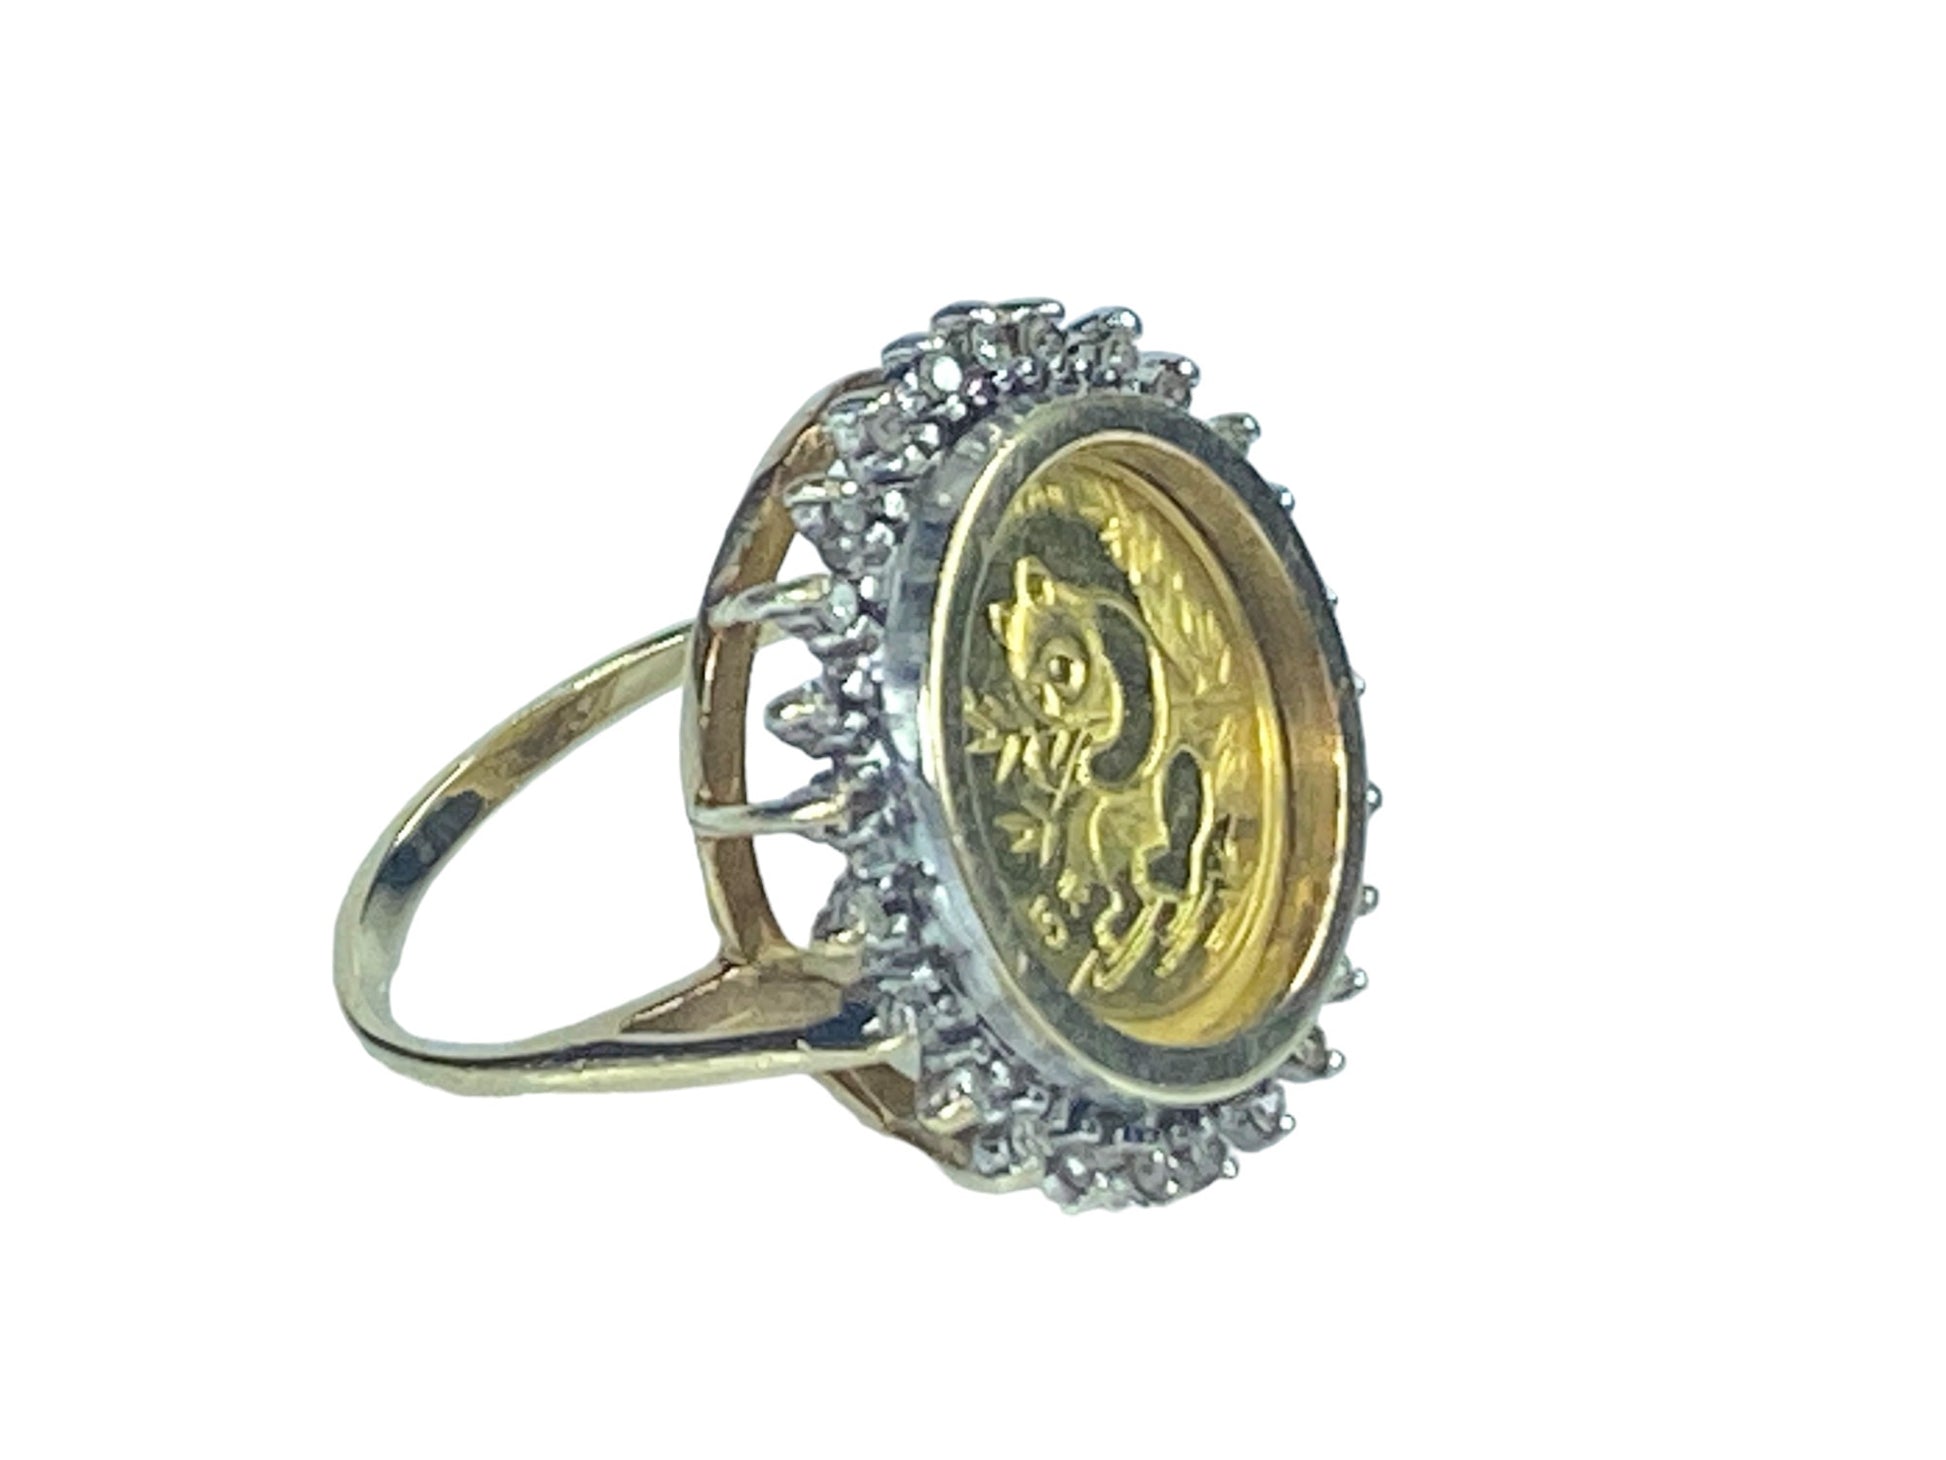 1991 $5.00 1/20 oz Panda 999.0 gold coin 0.18ct diamond 14K ring